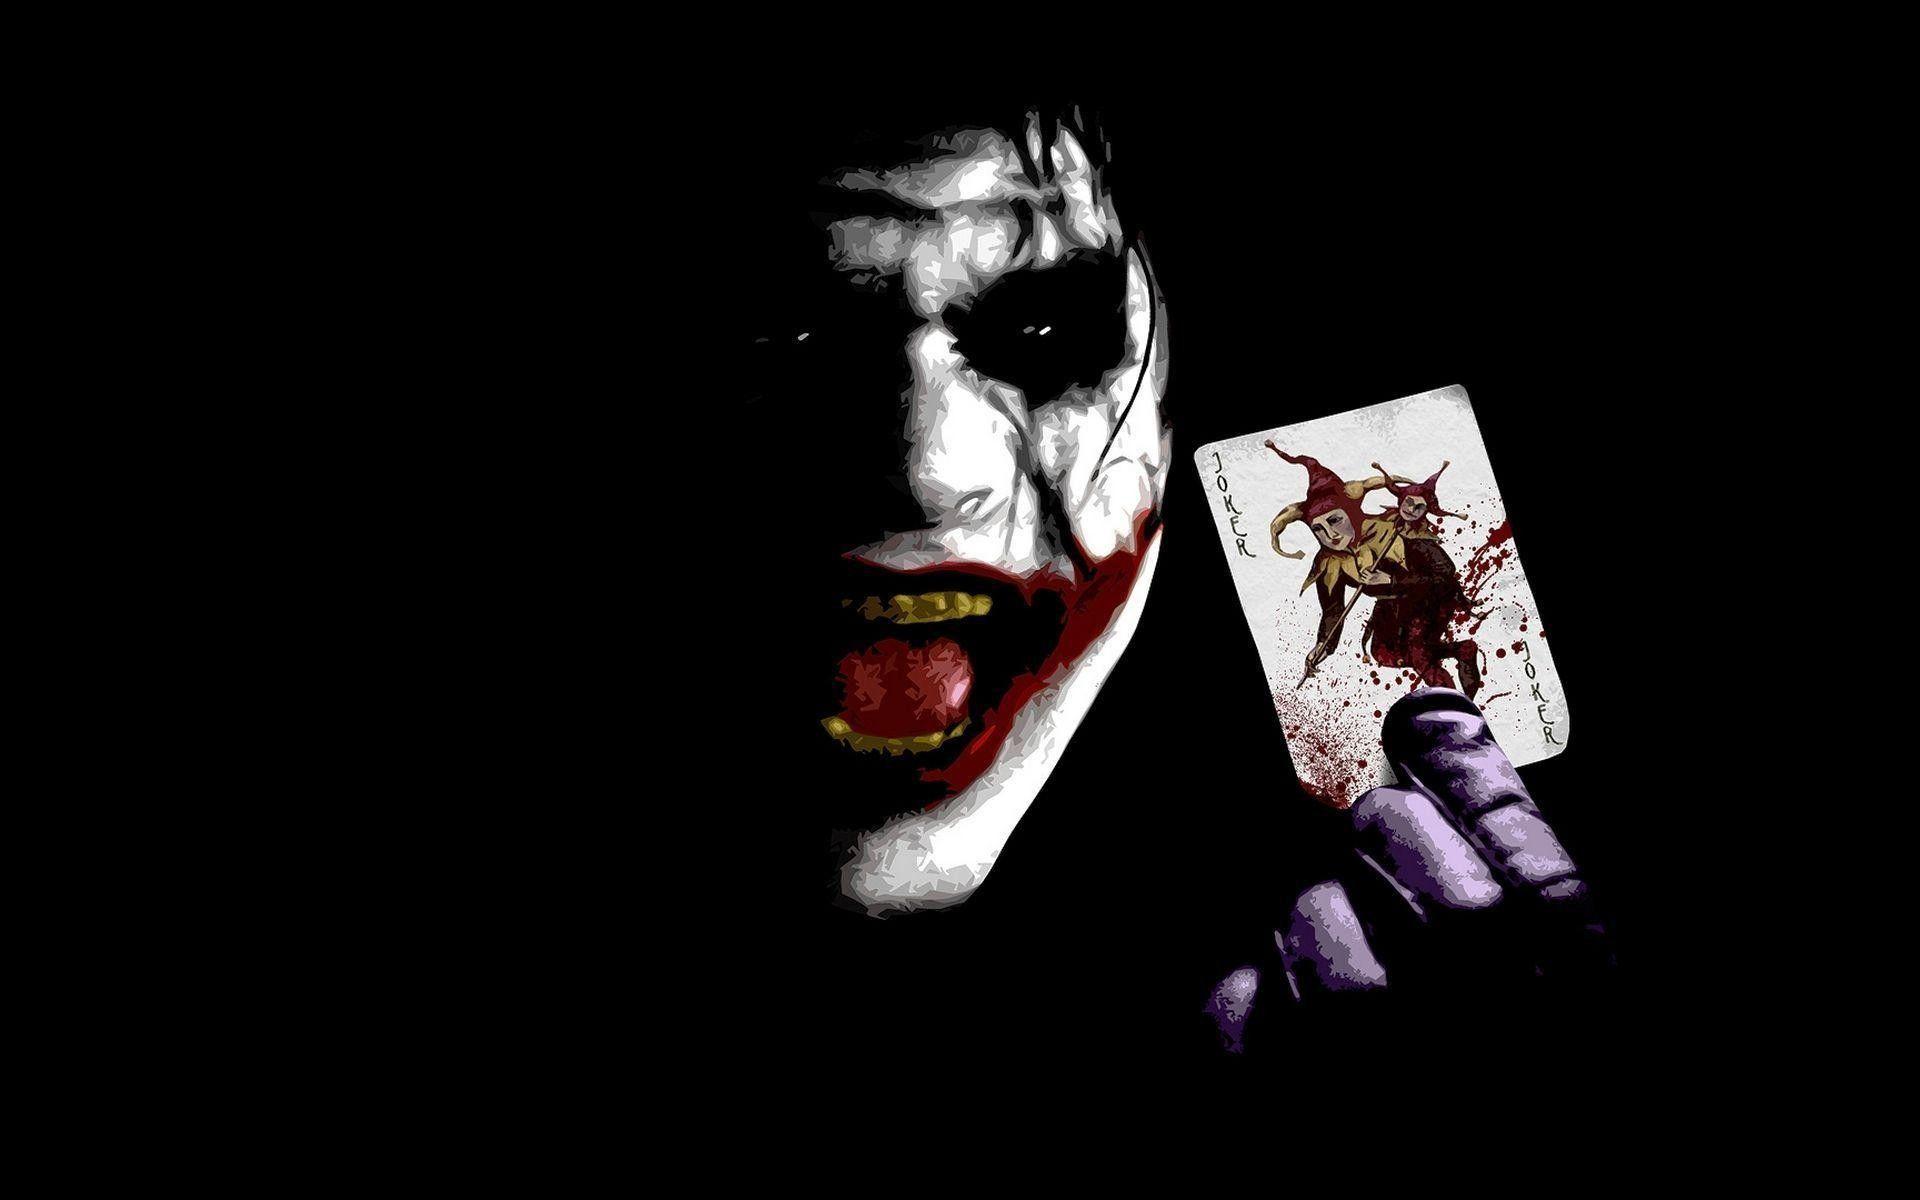 Joker Wallpaper 4K Mask Cyberpunk Dark background 1483